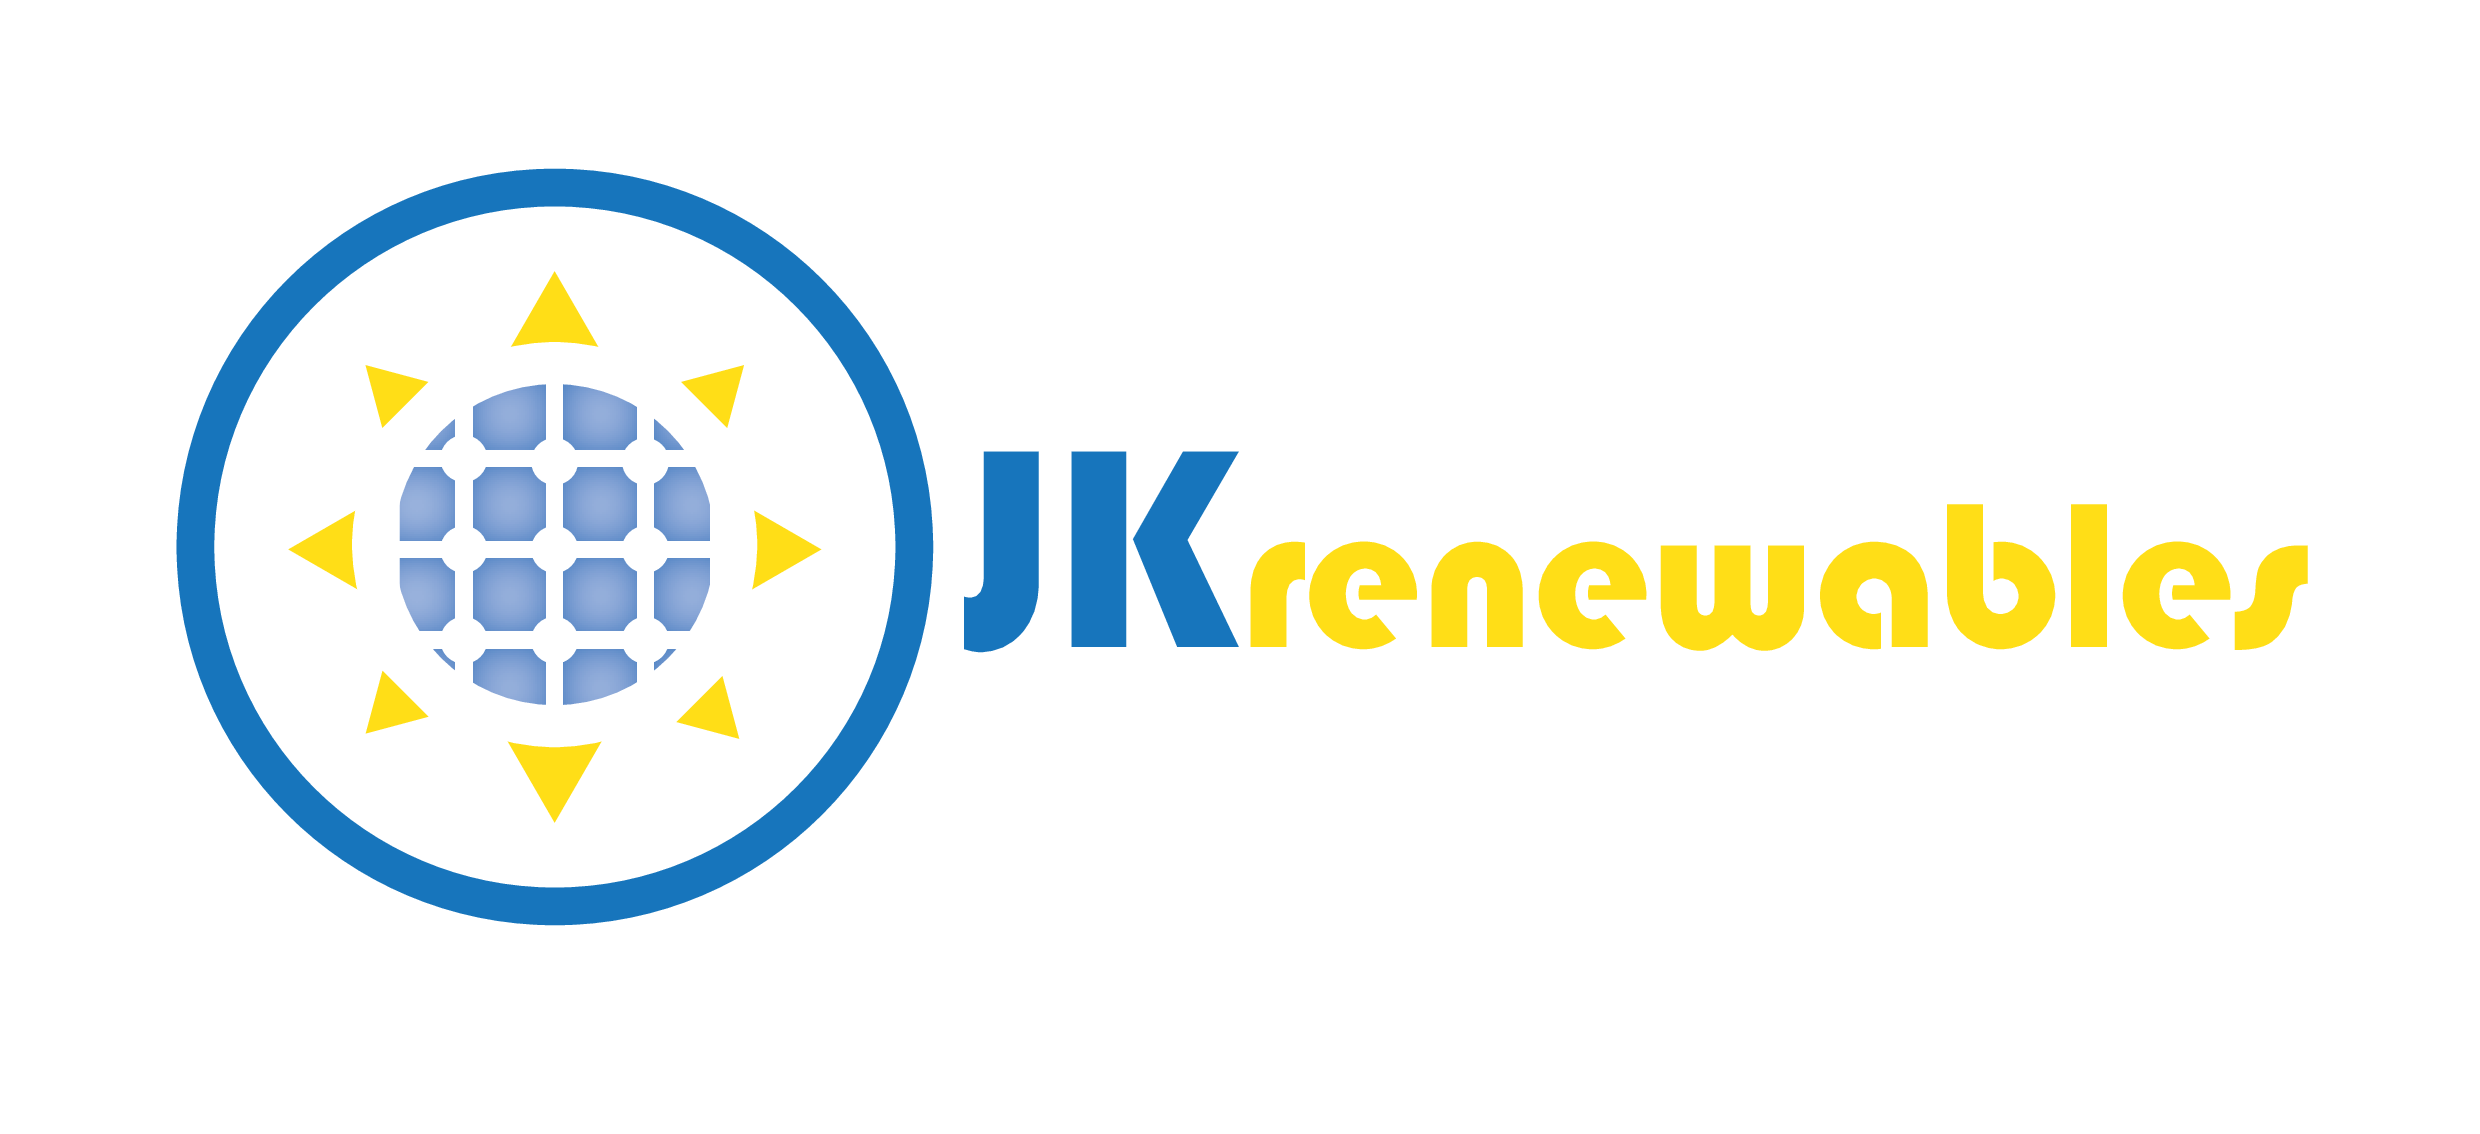 JK Renewables logo